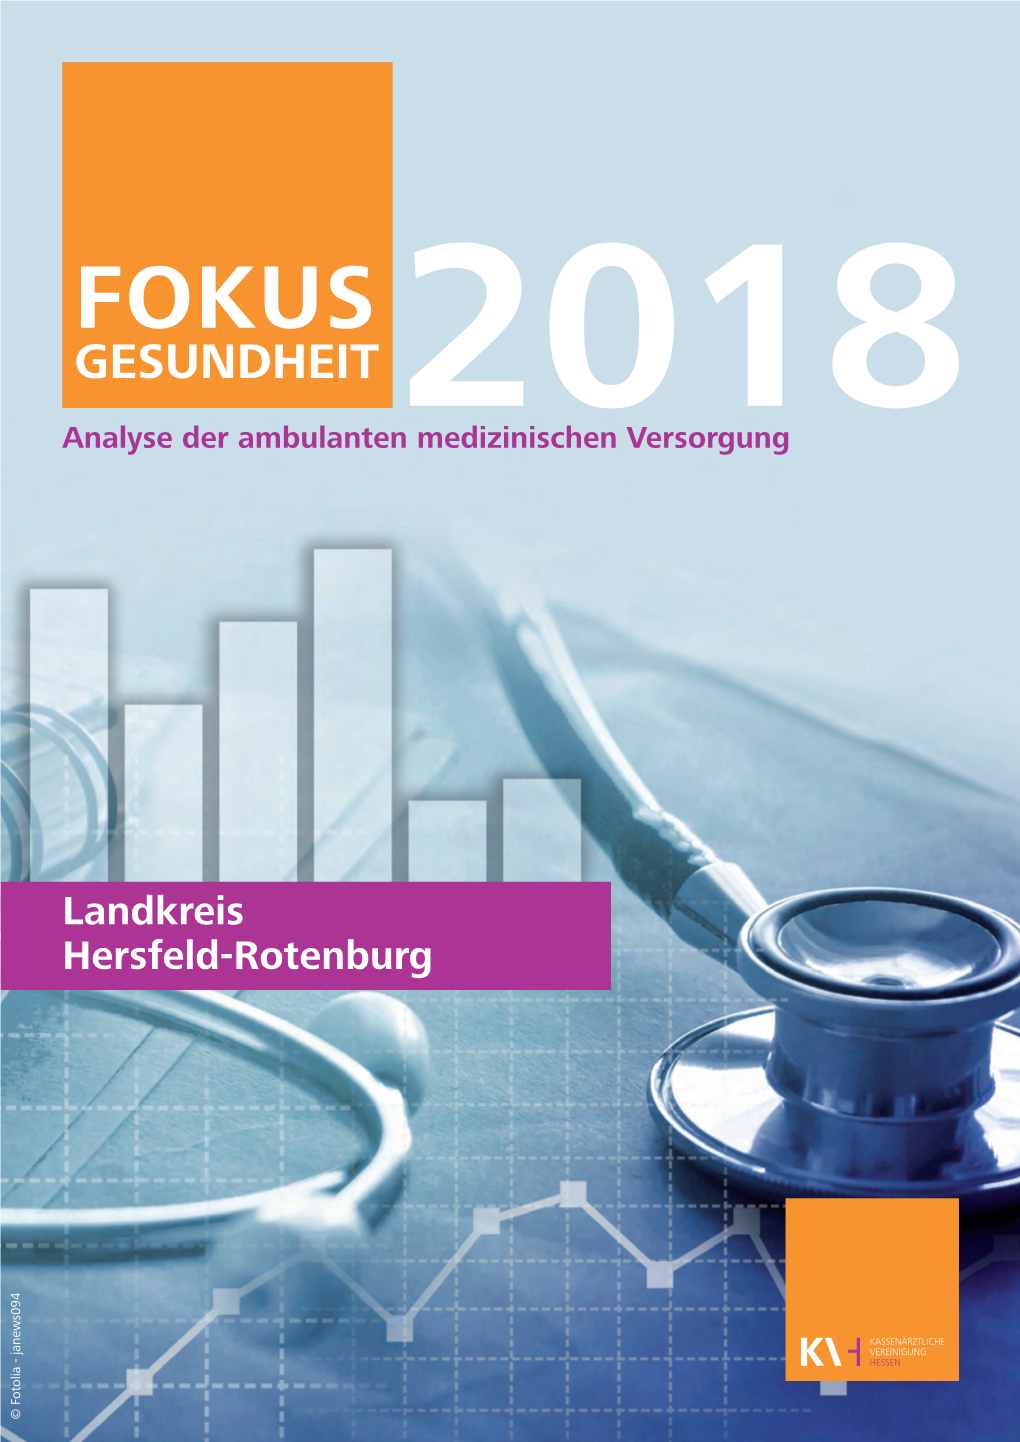 FOKUS-GESUNDHEIT Hersfeld-Rotenburg 2018.Pdf 63